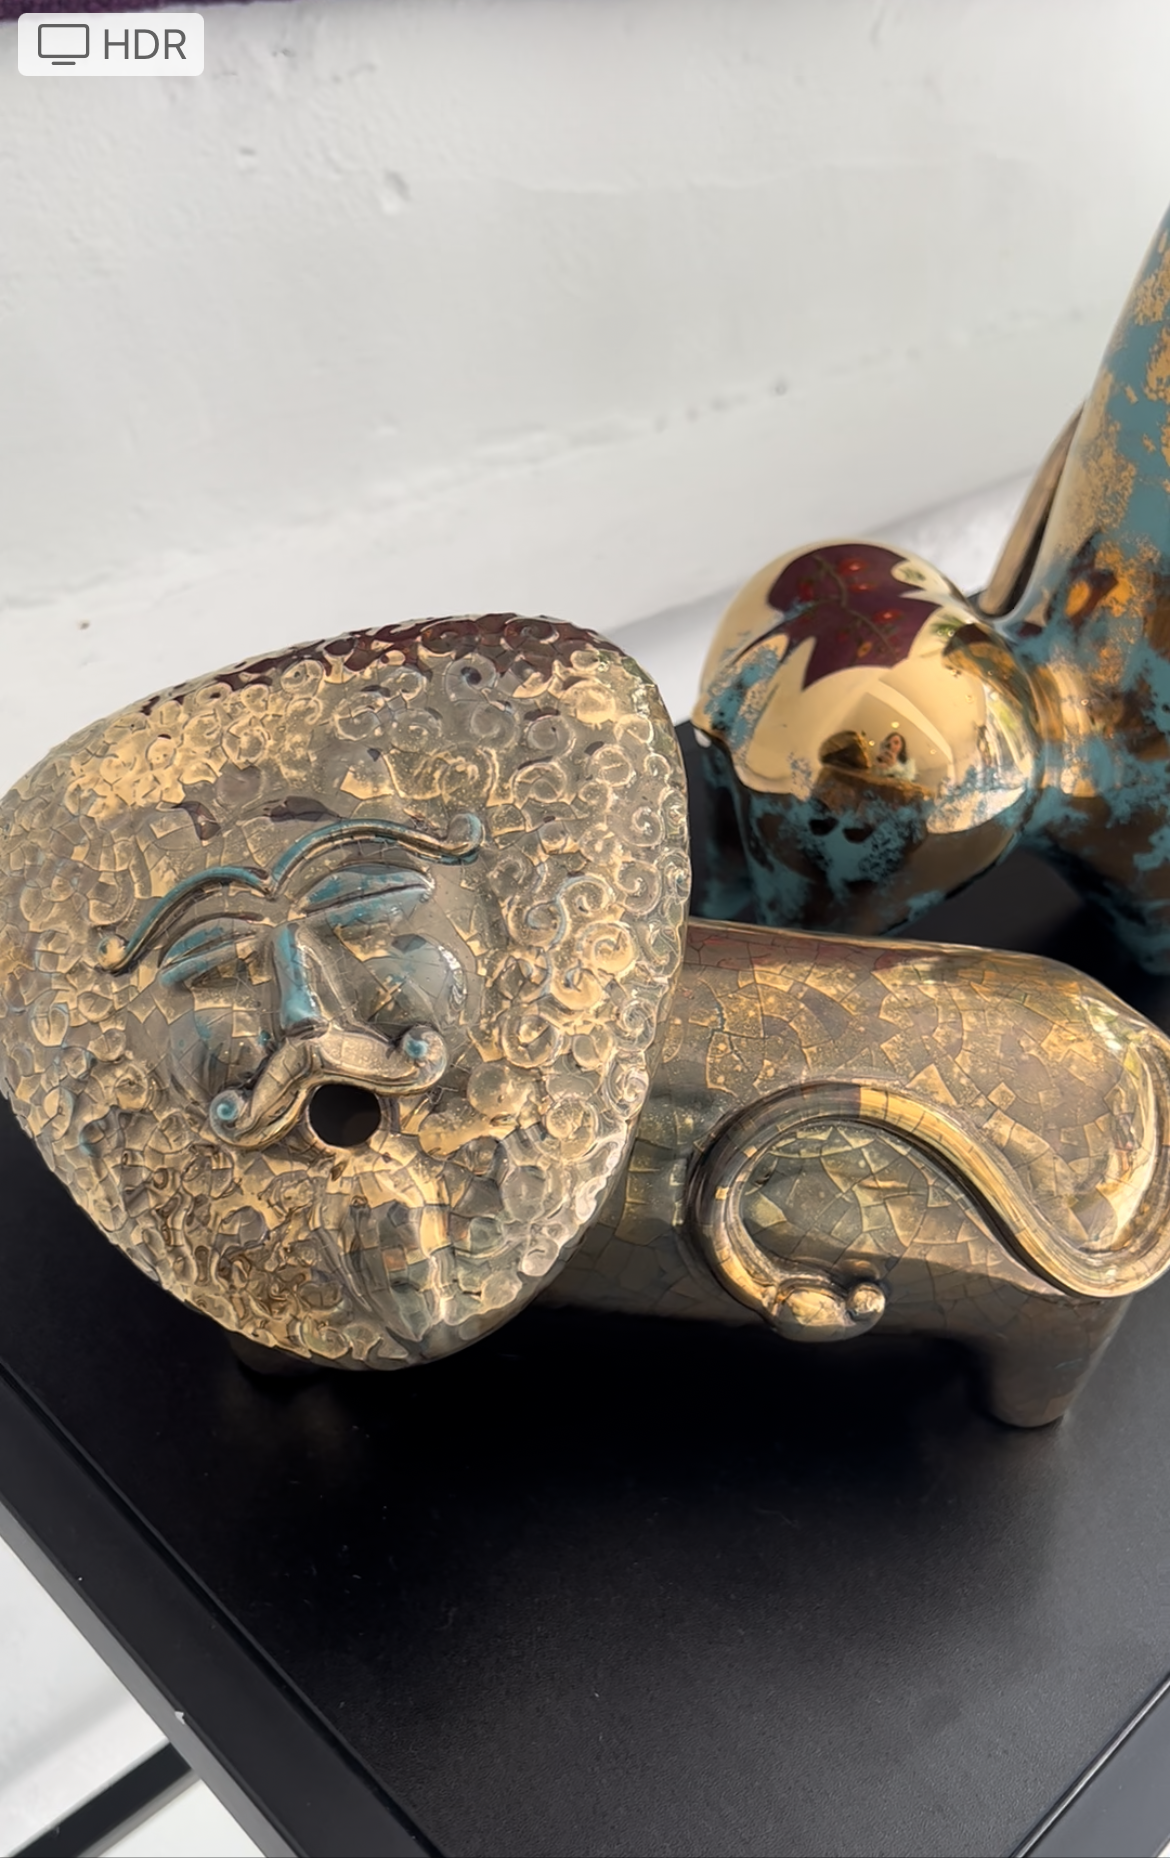 Golden ceramic Lion with triangular head - small